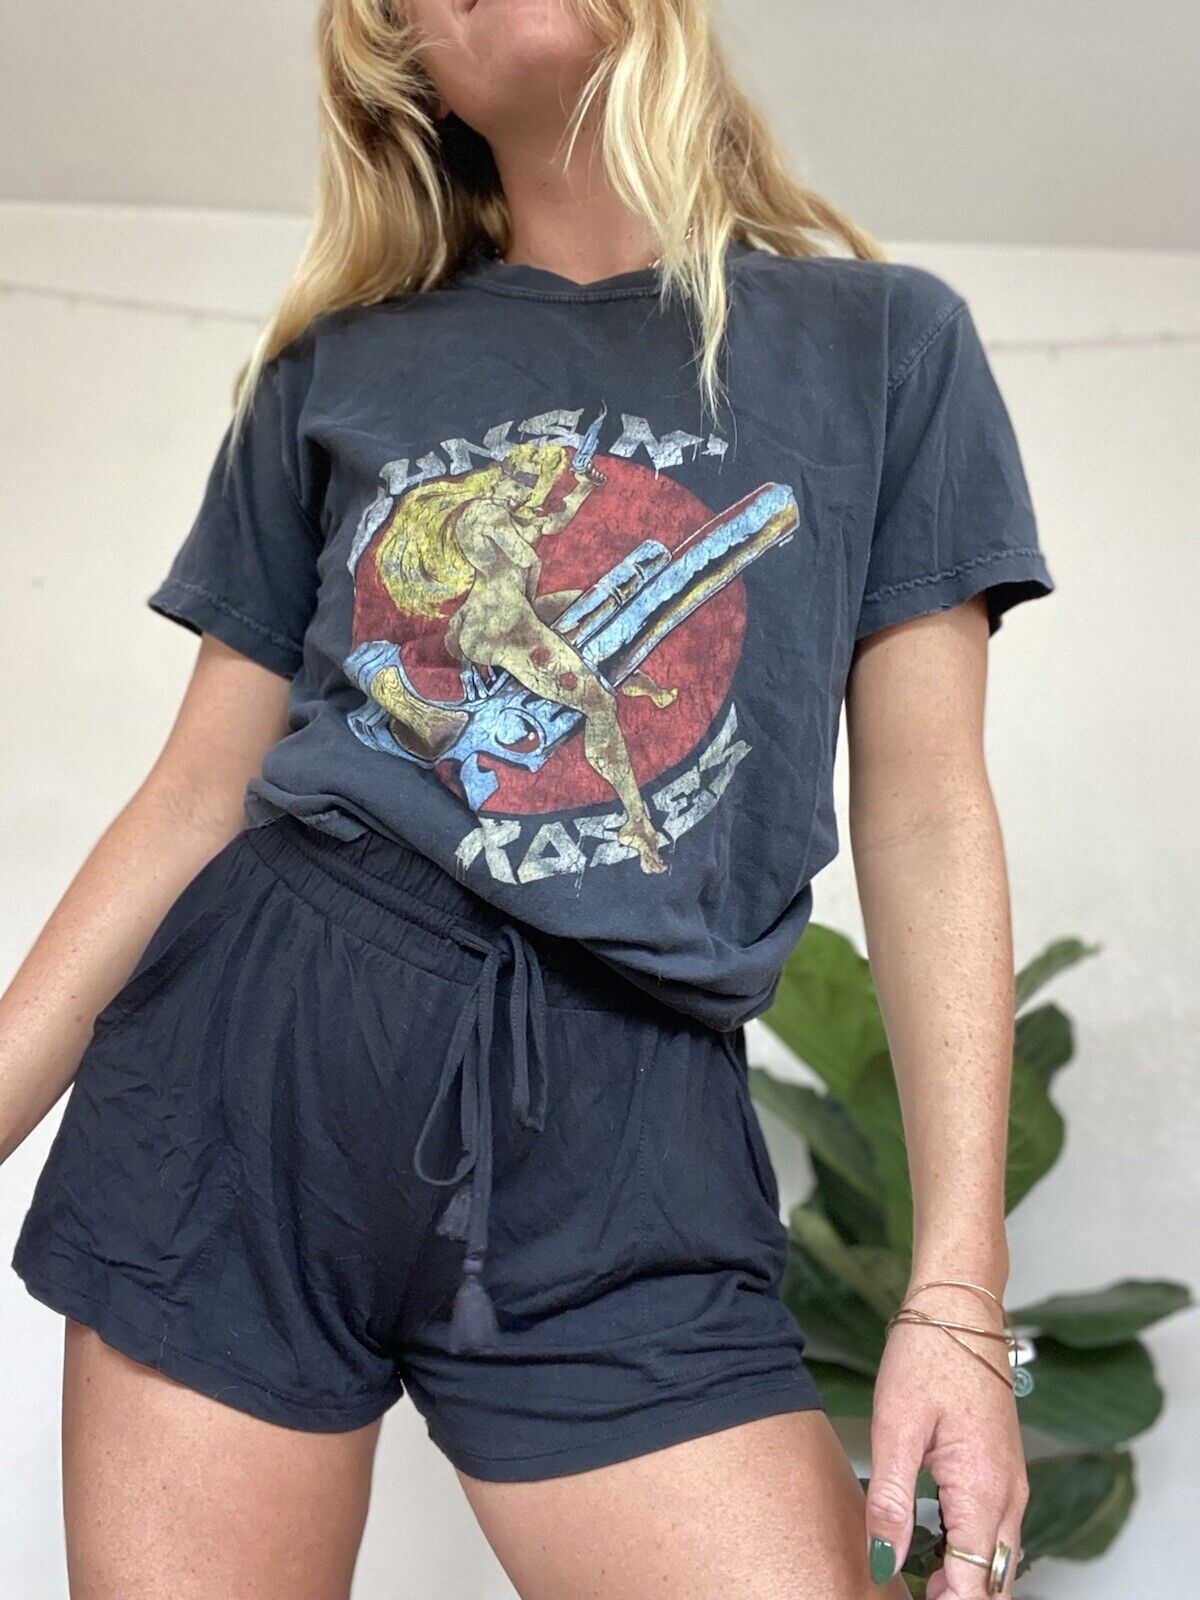 Guns N Roses Tshirt - Comfort Colors - Size Small # 1876